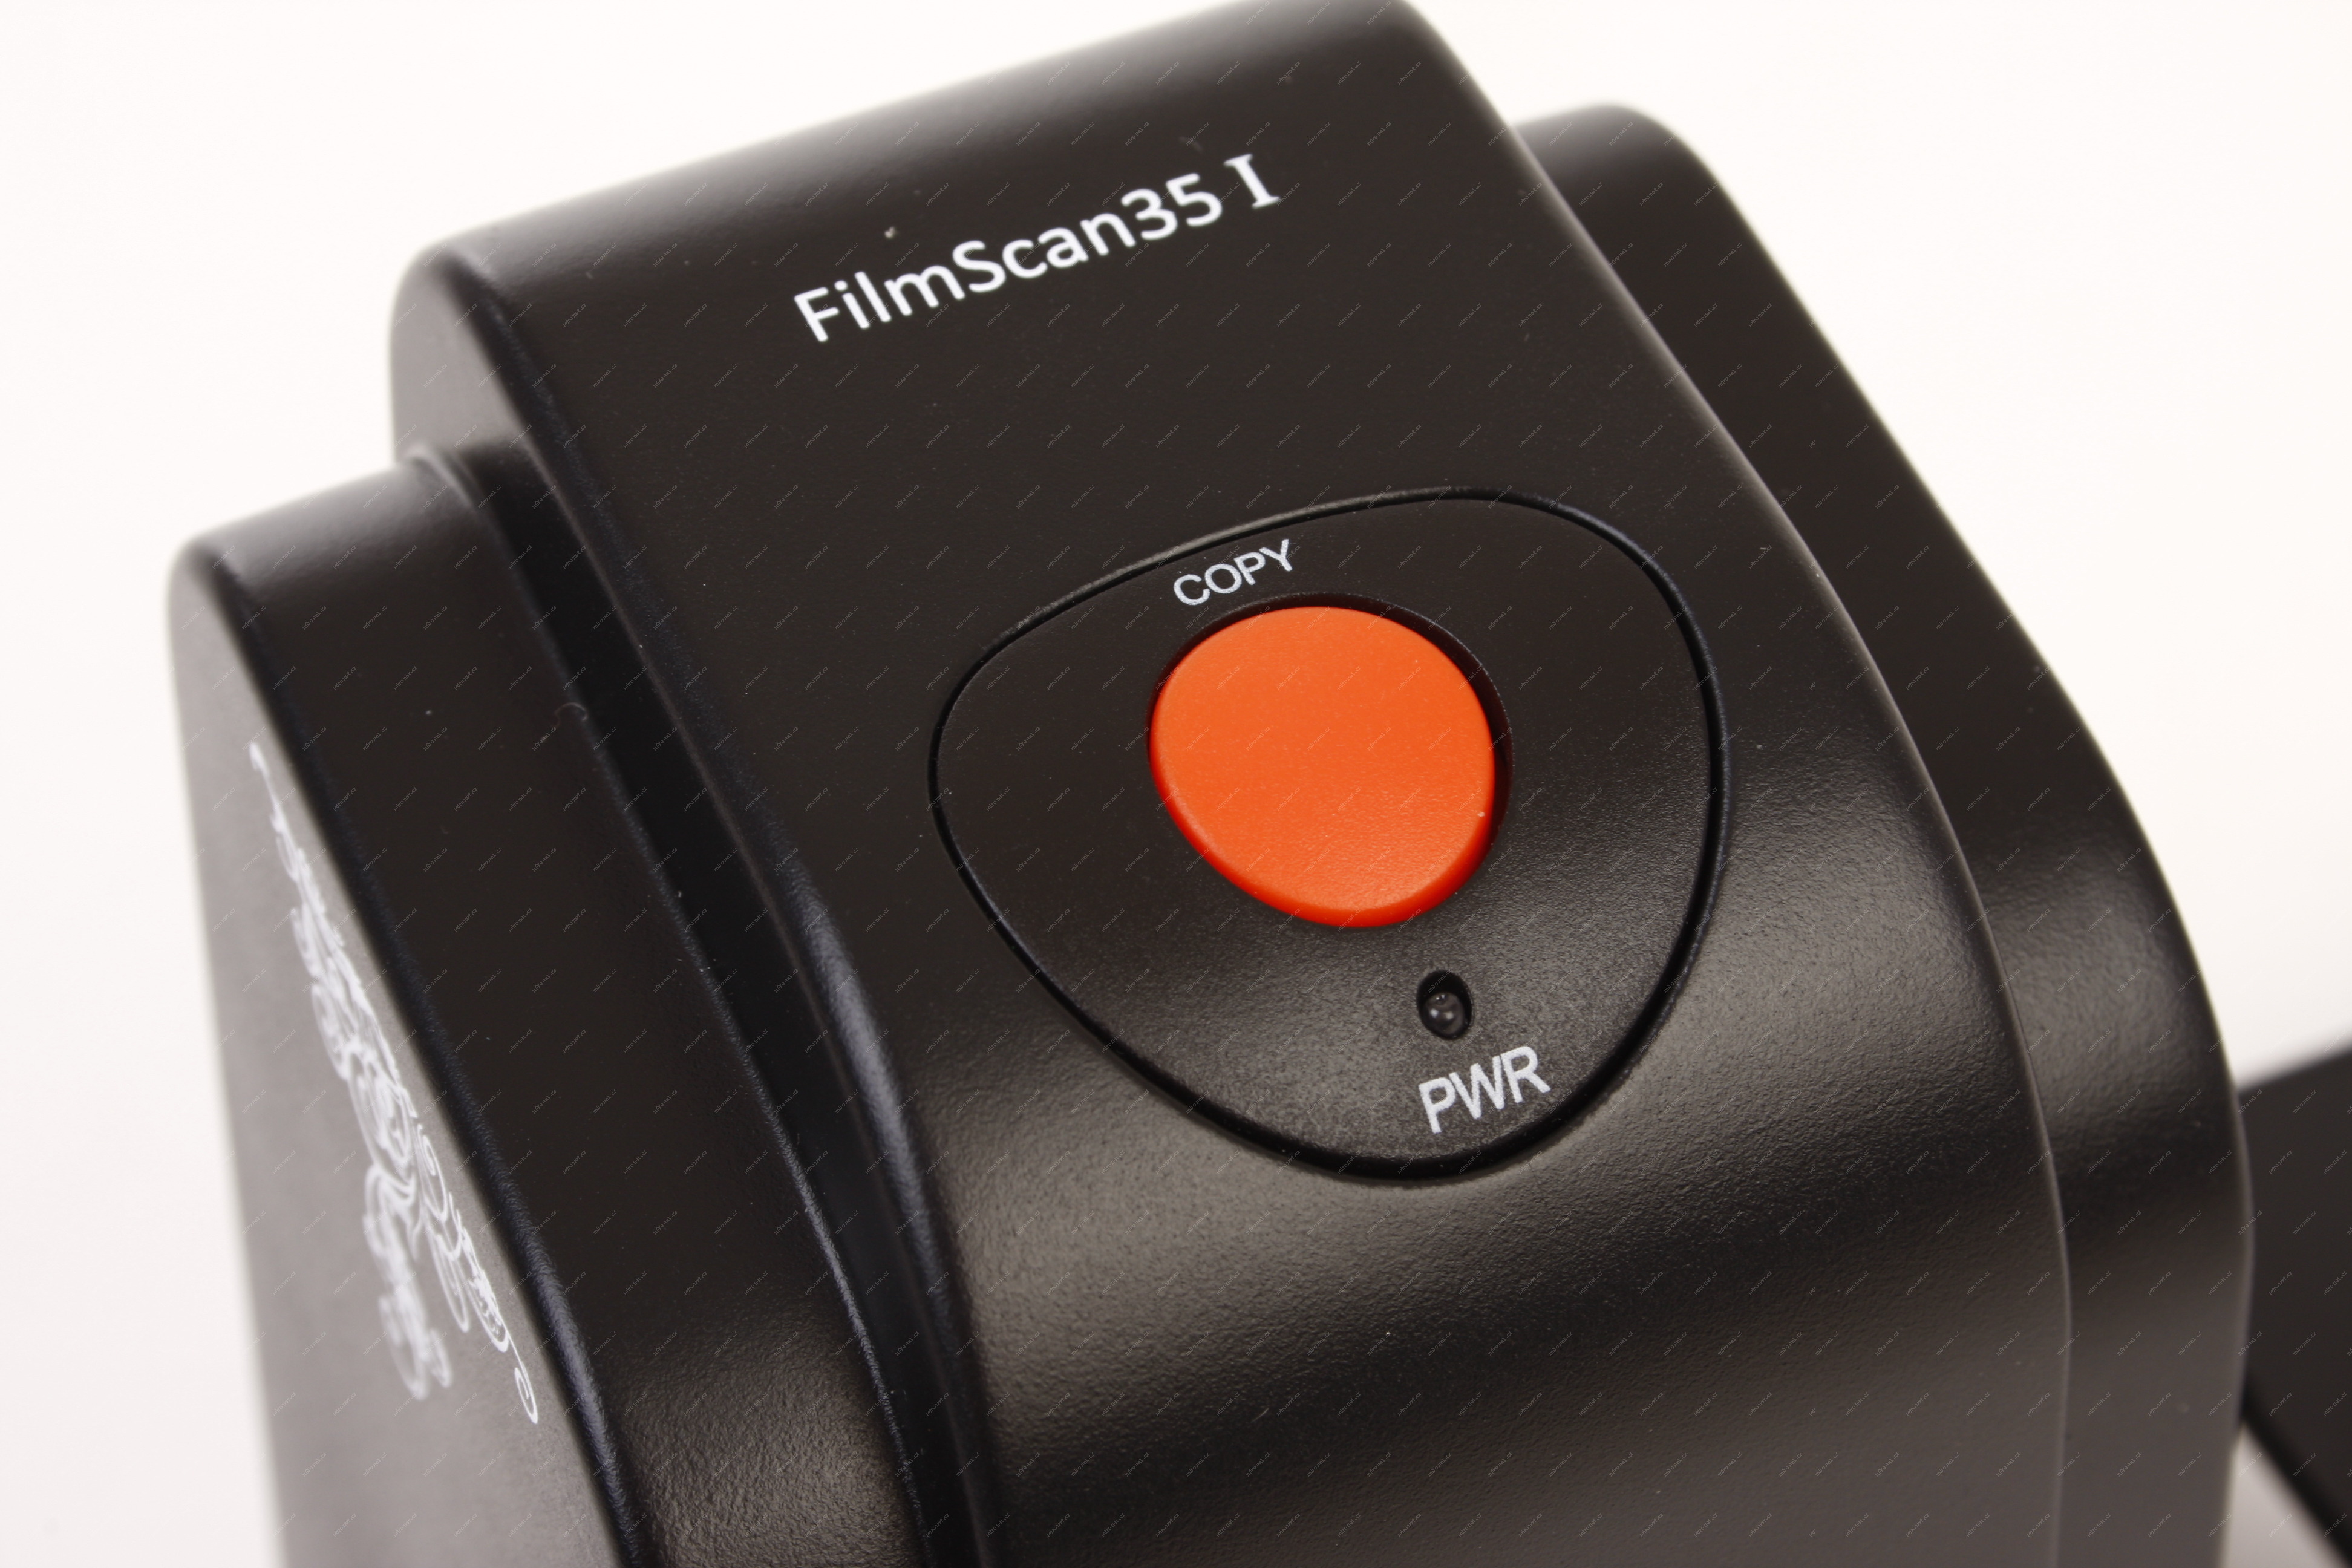 innovative technology filmscan 35 i software free download